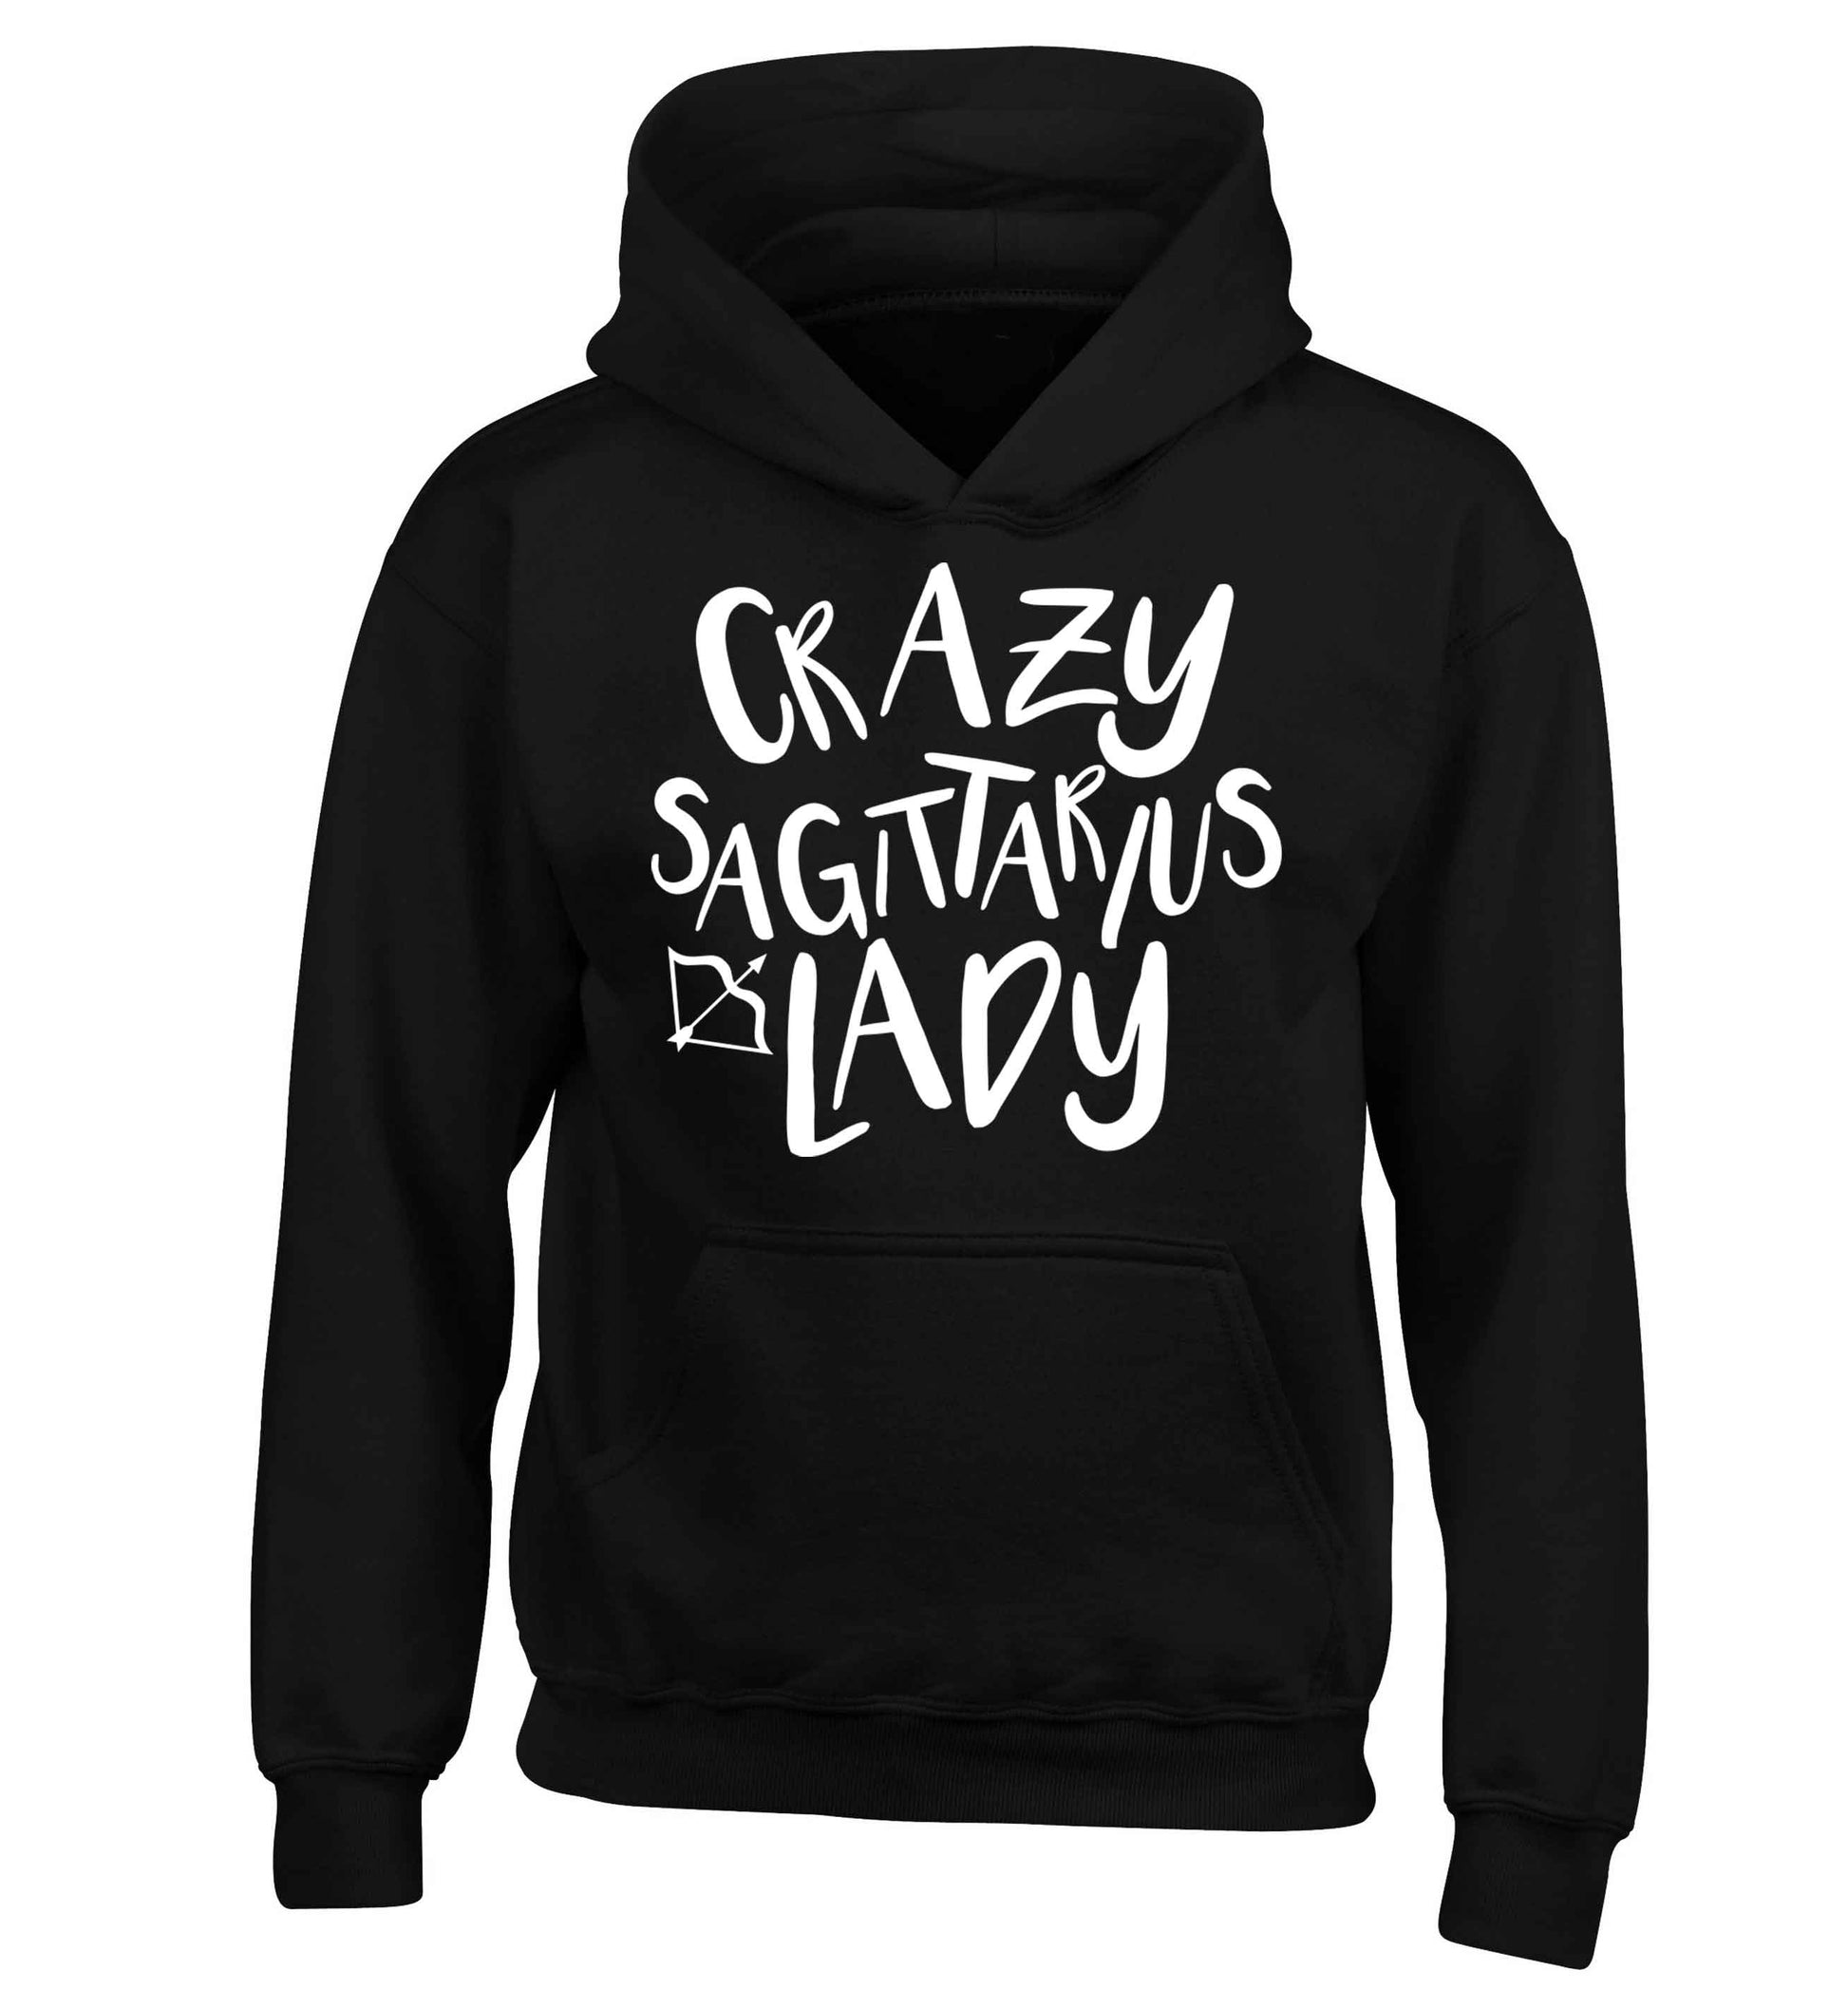 Crazy sagittarius lady children's black hoodie 12-13 Years